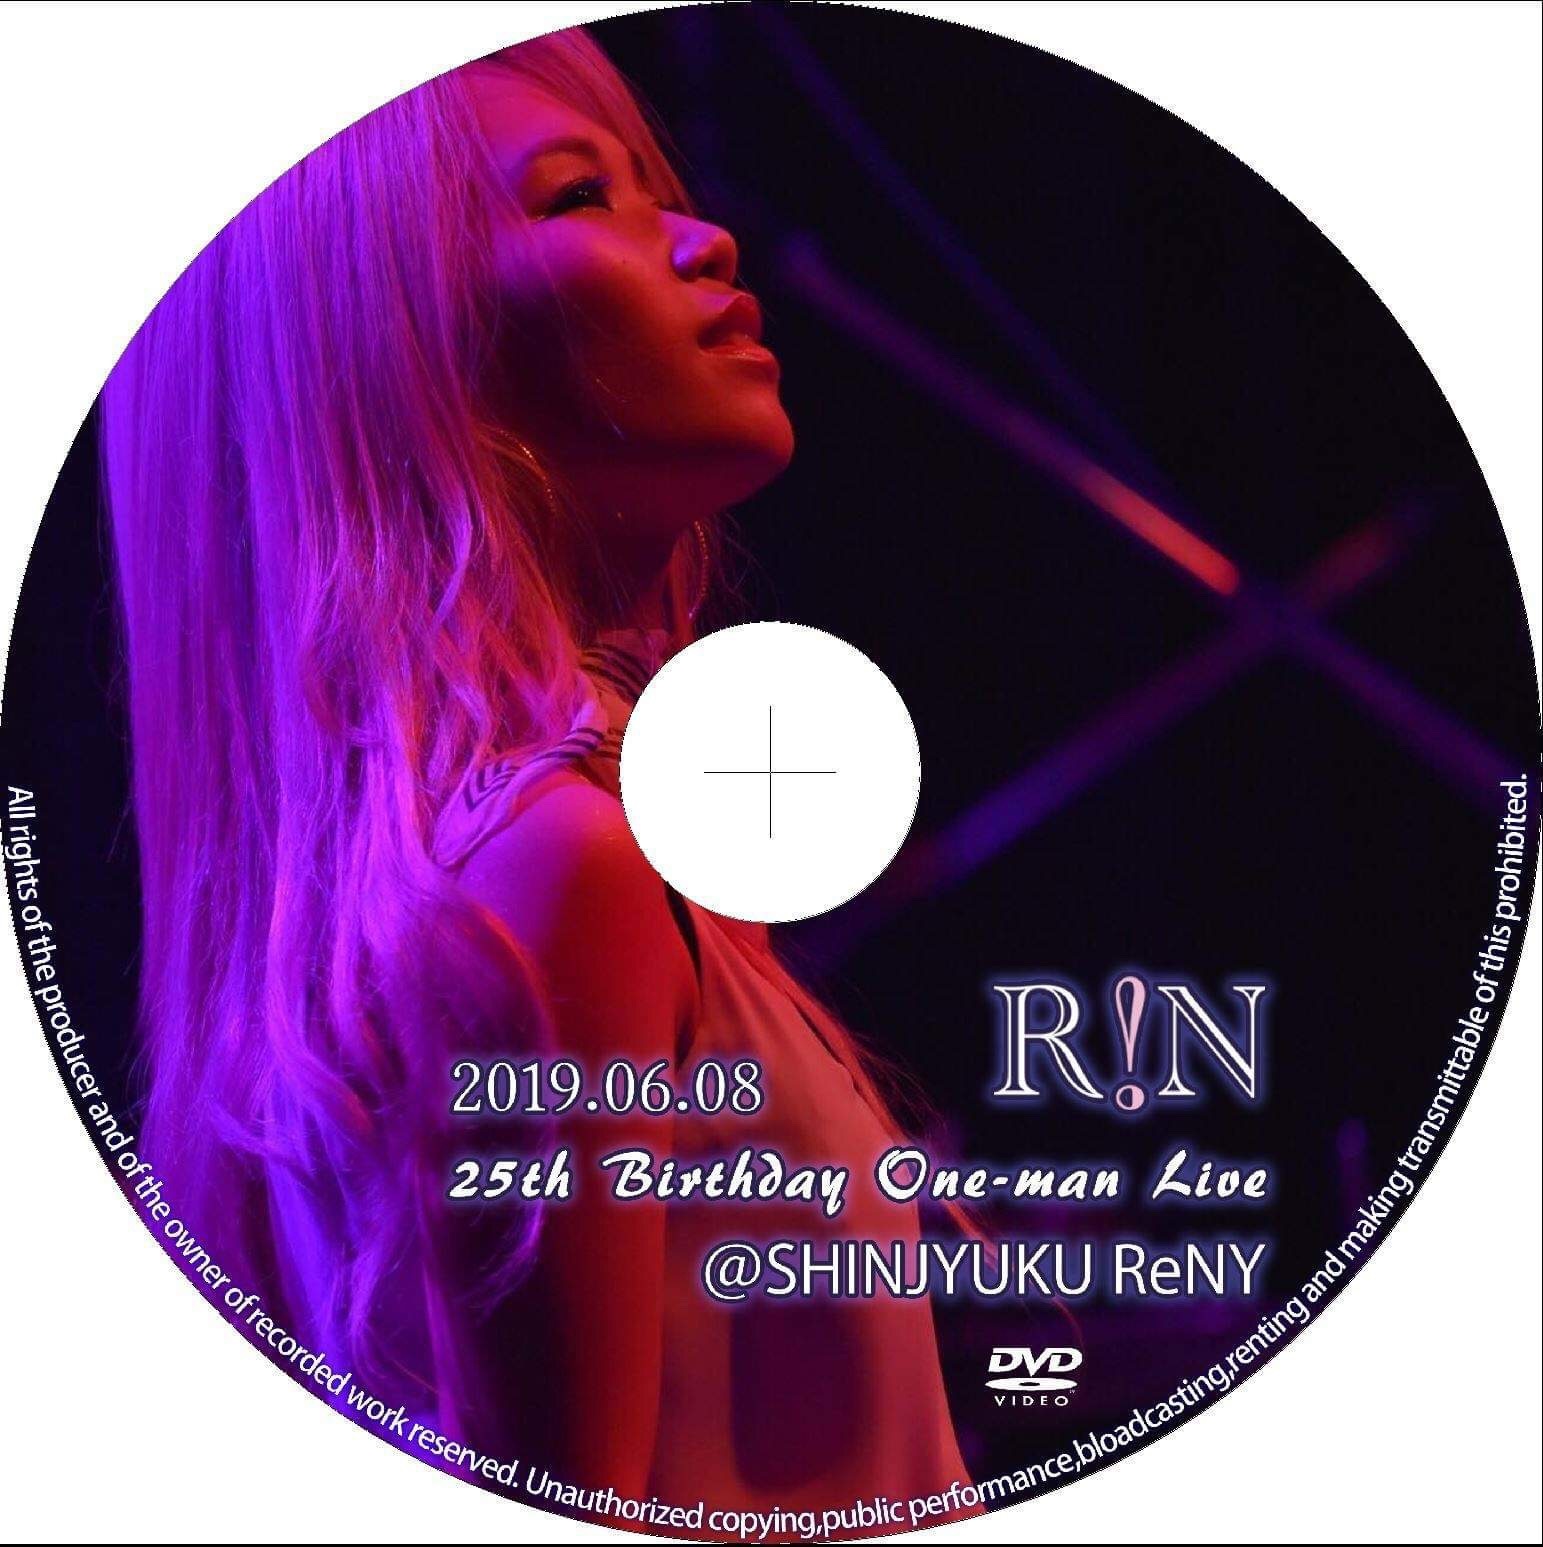 4th Live DVD「25th Birthday One-man Live@SHINJYUKU ReNY」